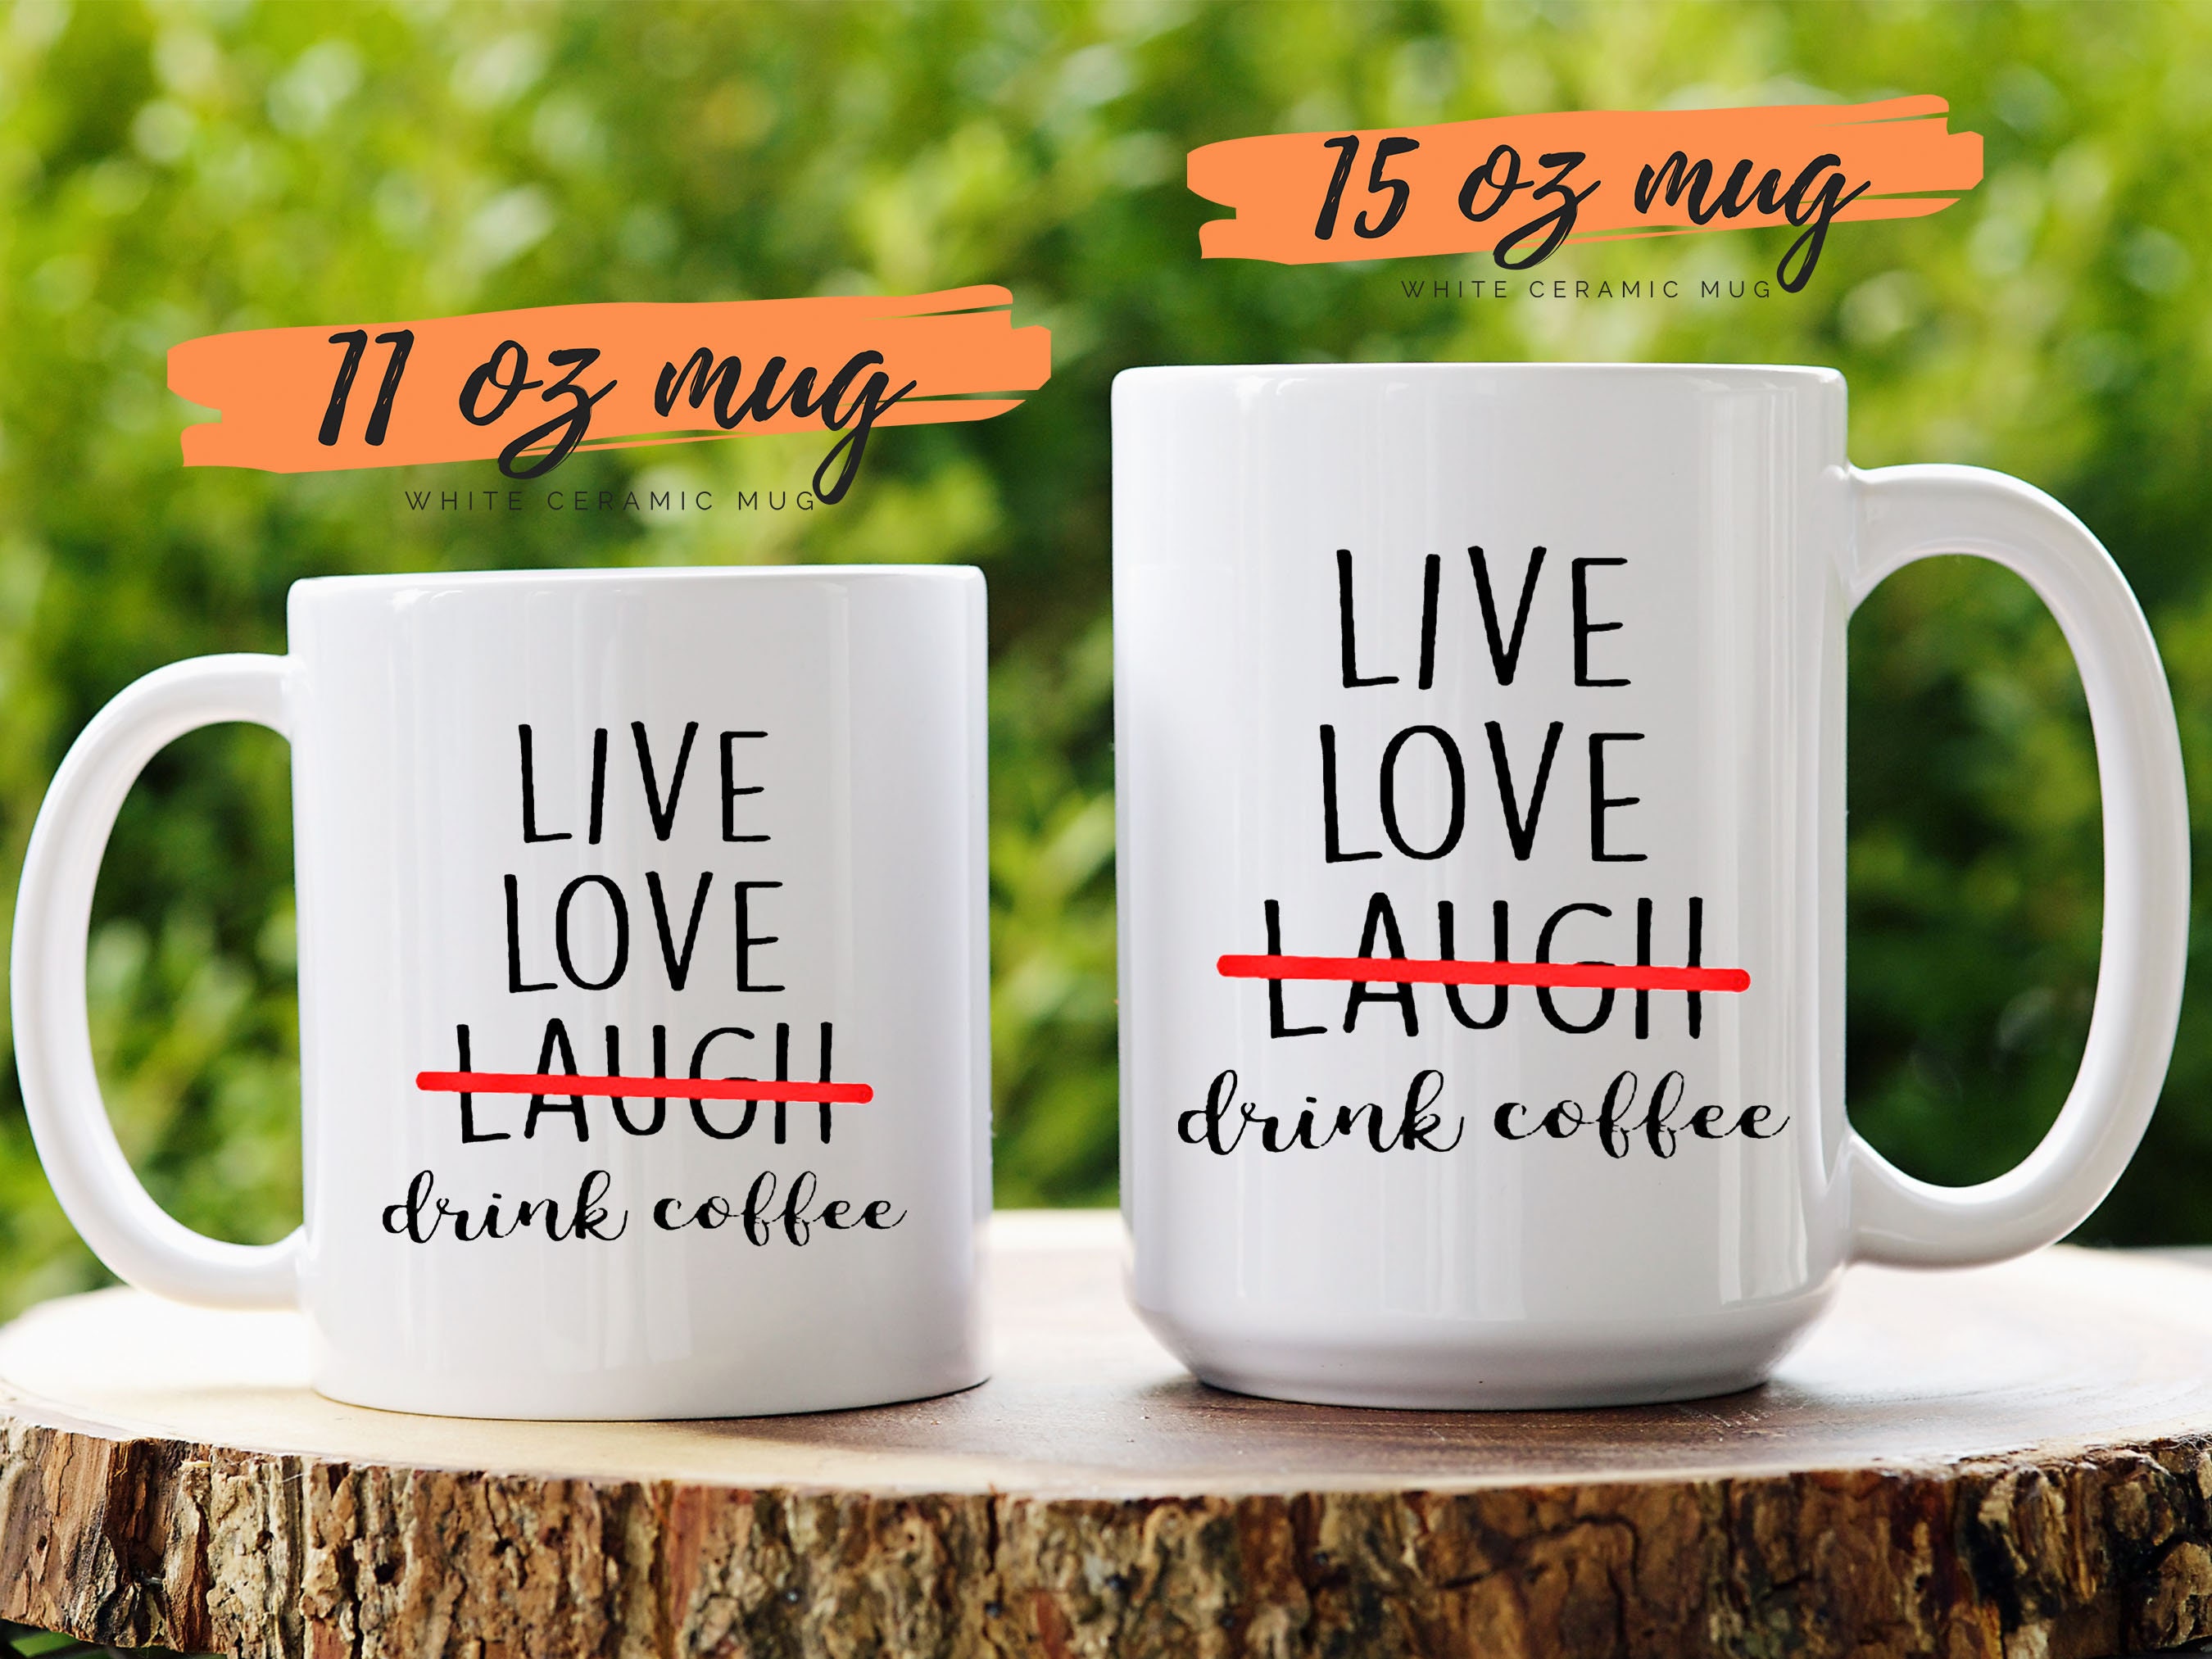 Live Laugh Ligma Coffee Mugs